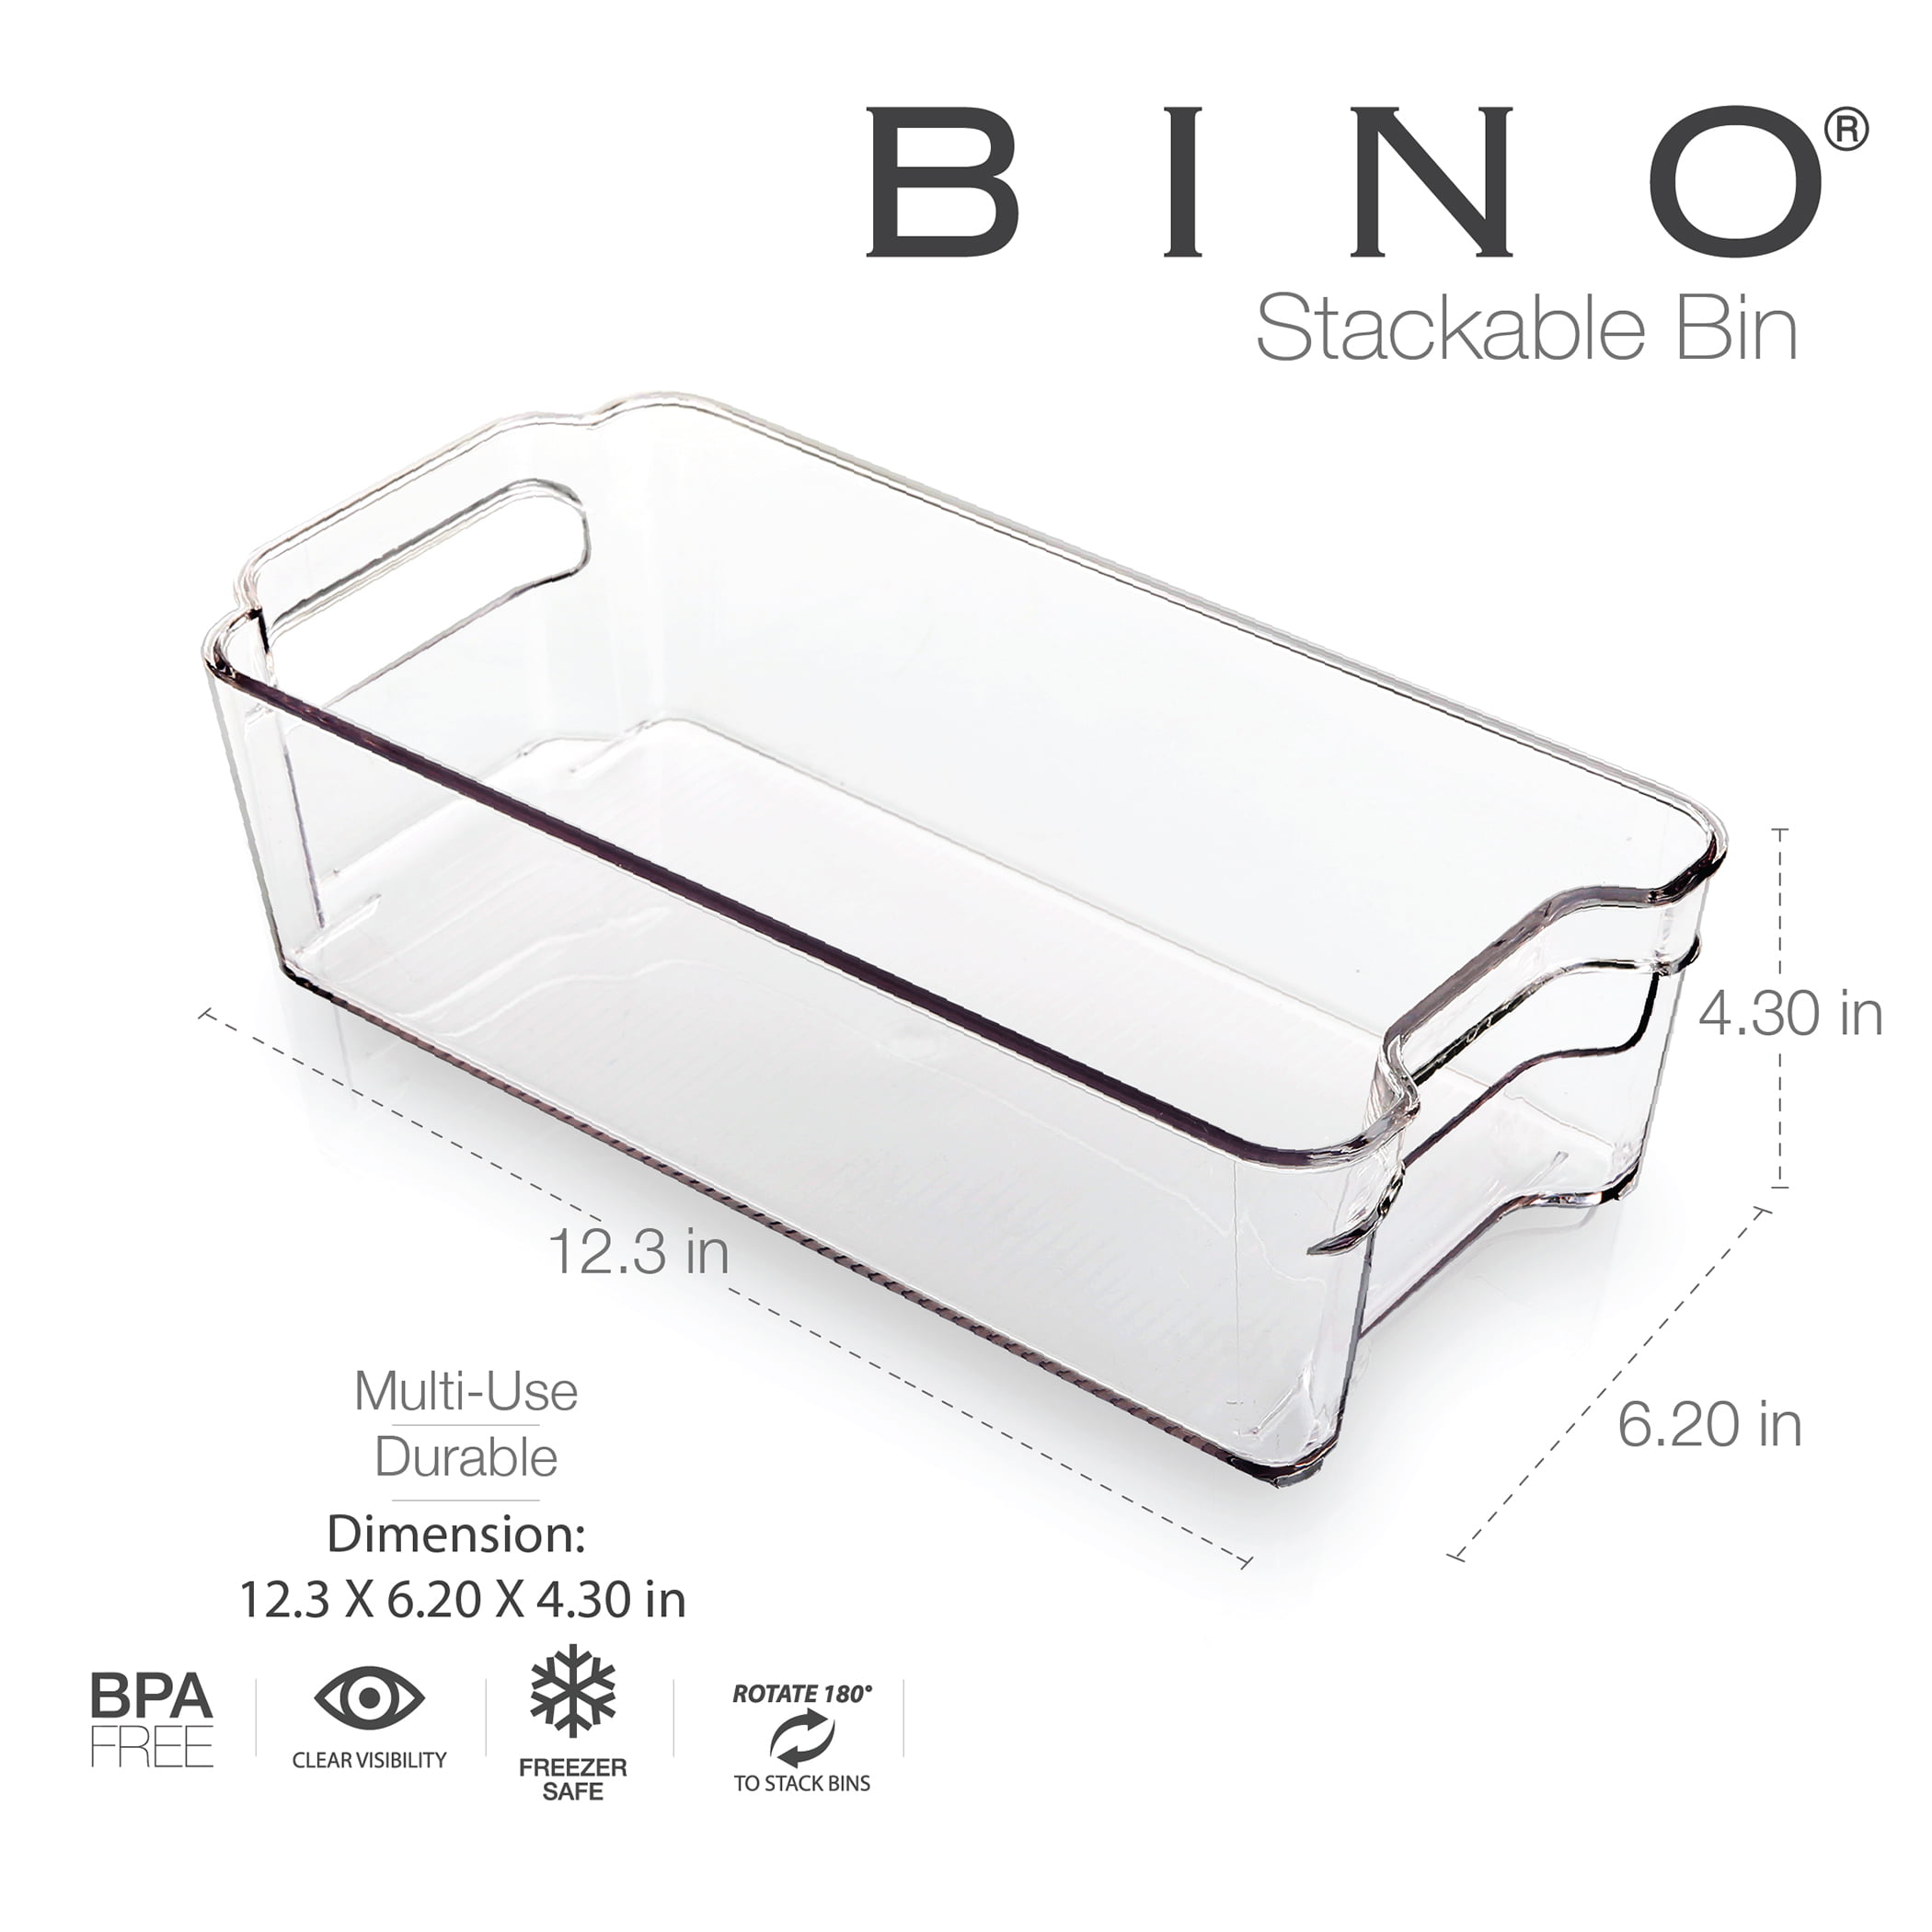 Medium 2 Pack Pantry Organiza BINO Stackable Plastic Organizer Storage Bins